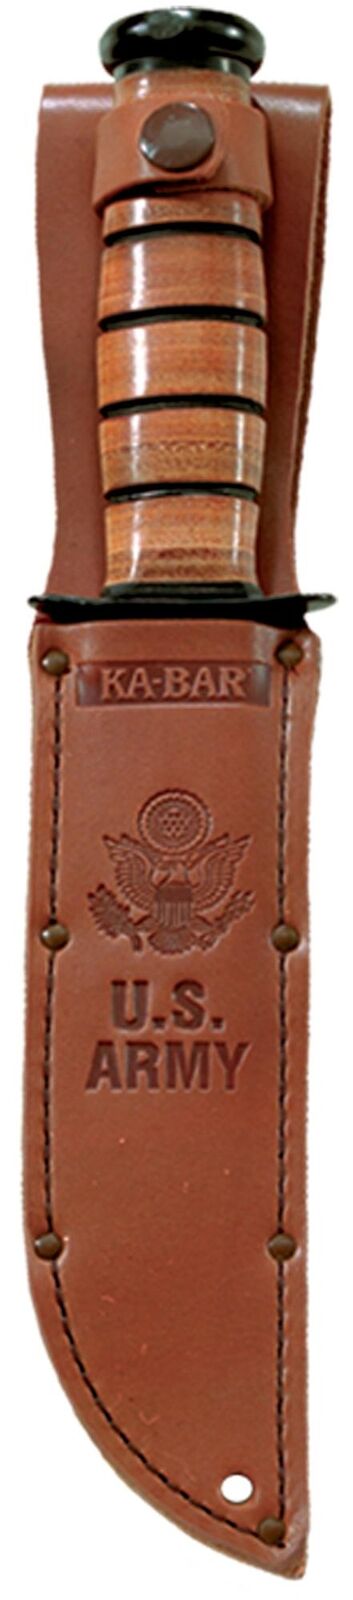 Ka-Bar US Army Vietnam War Commerative 1095 Fixed Blade Knife w/Sheath 9139